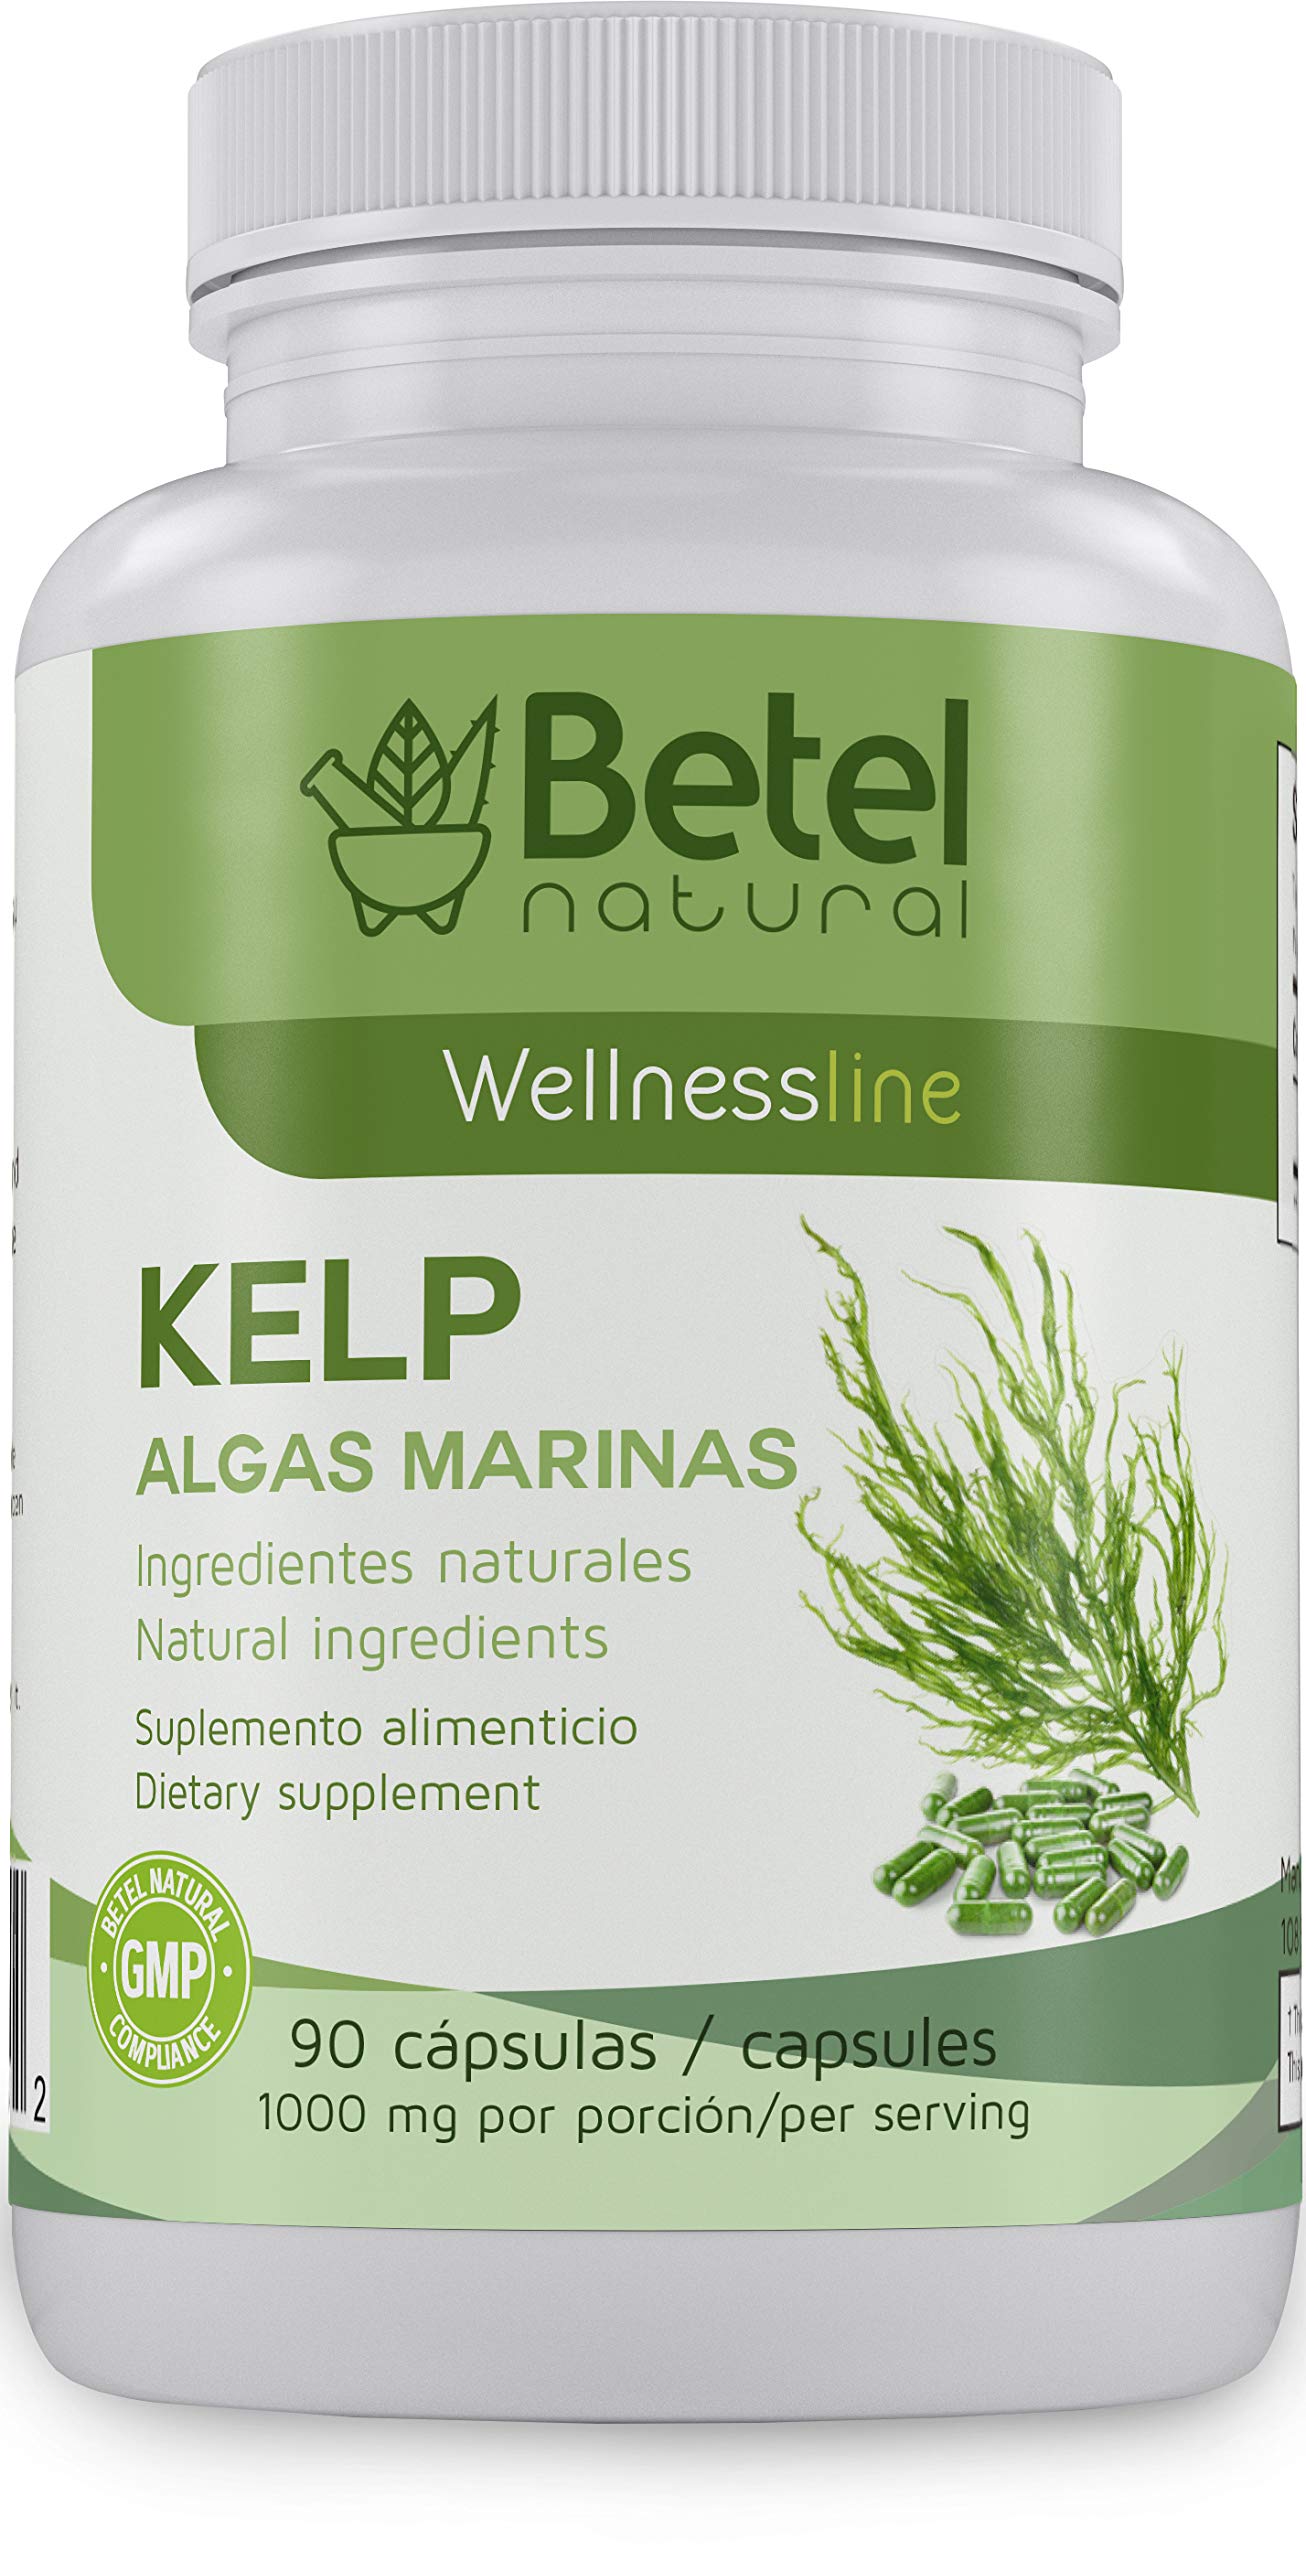 Algas Marinas/Kelp 90 Capsules by Betel Natural - 1000 mg per